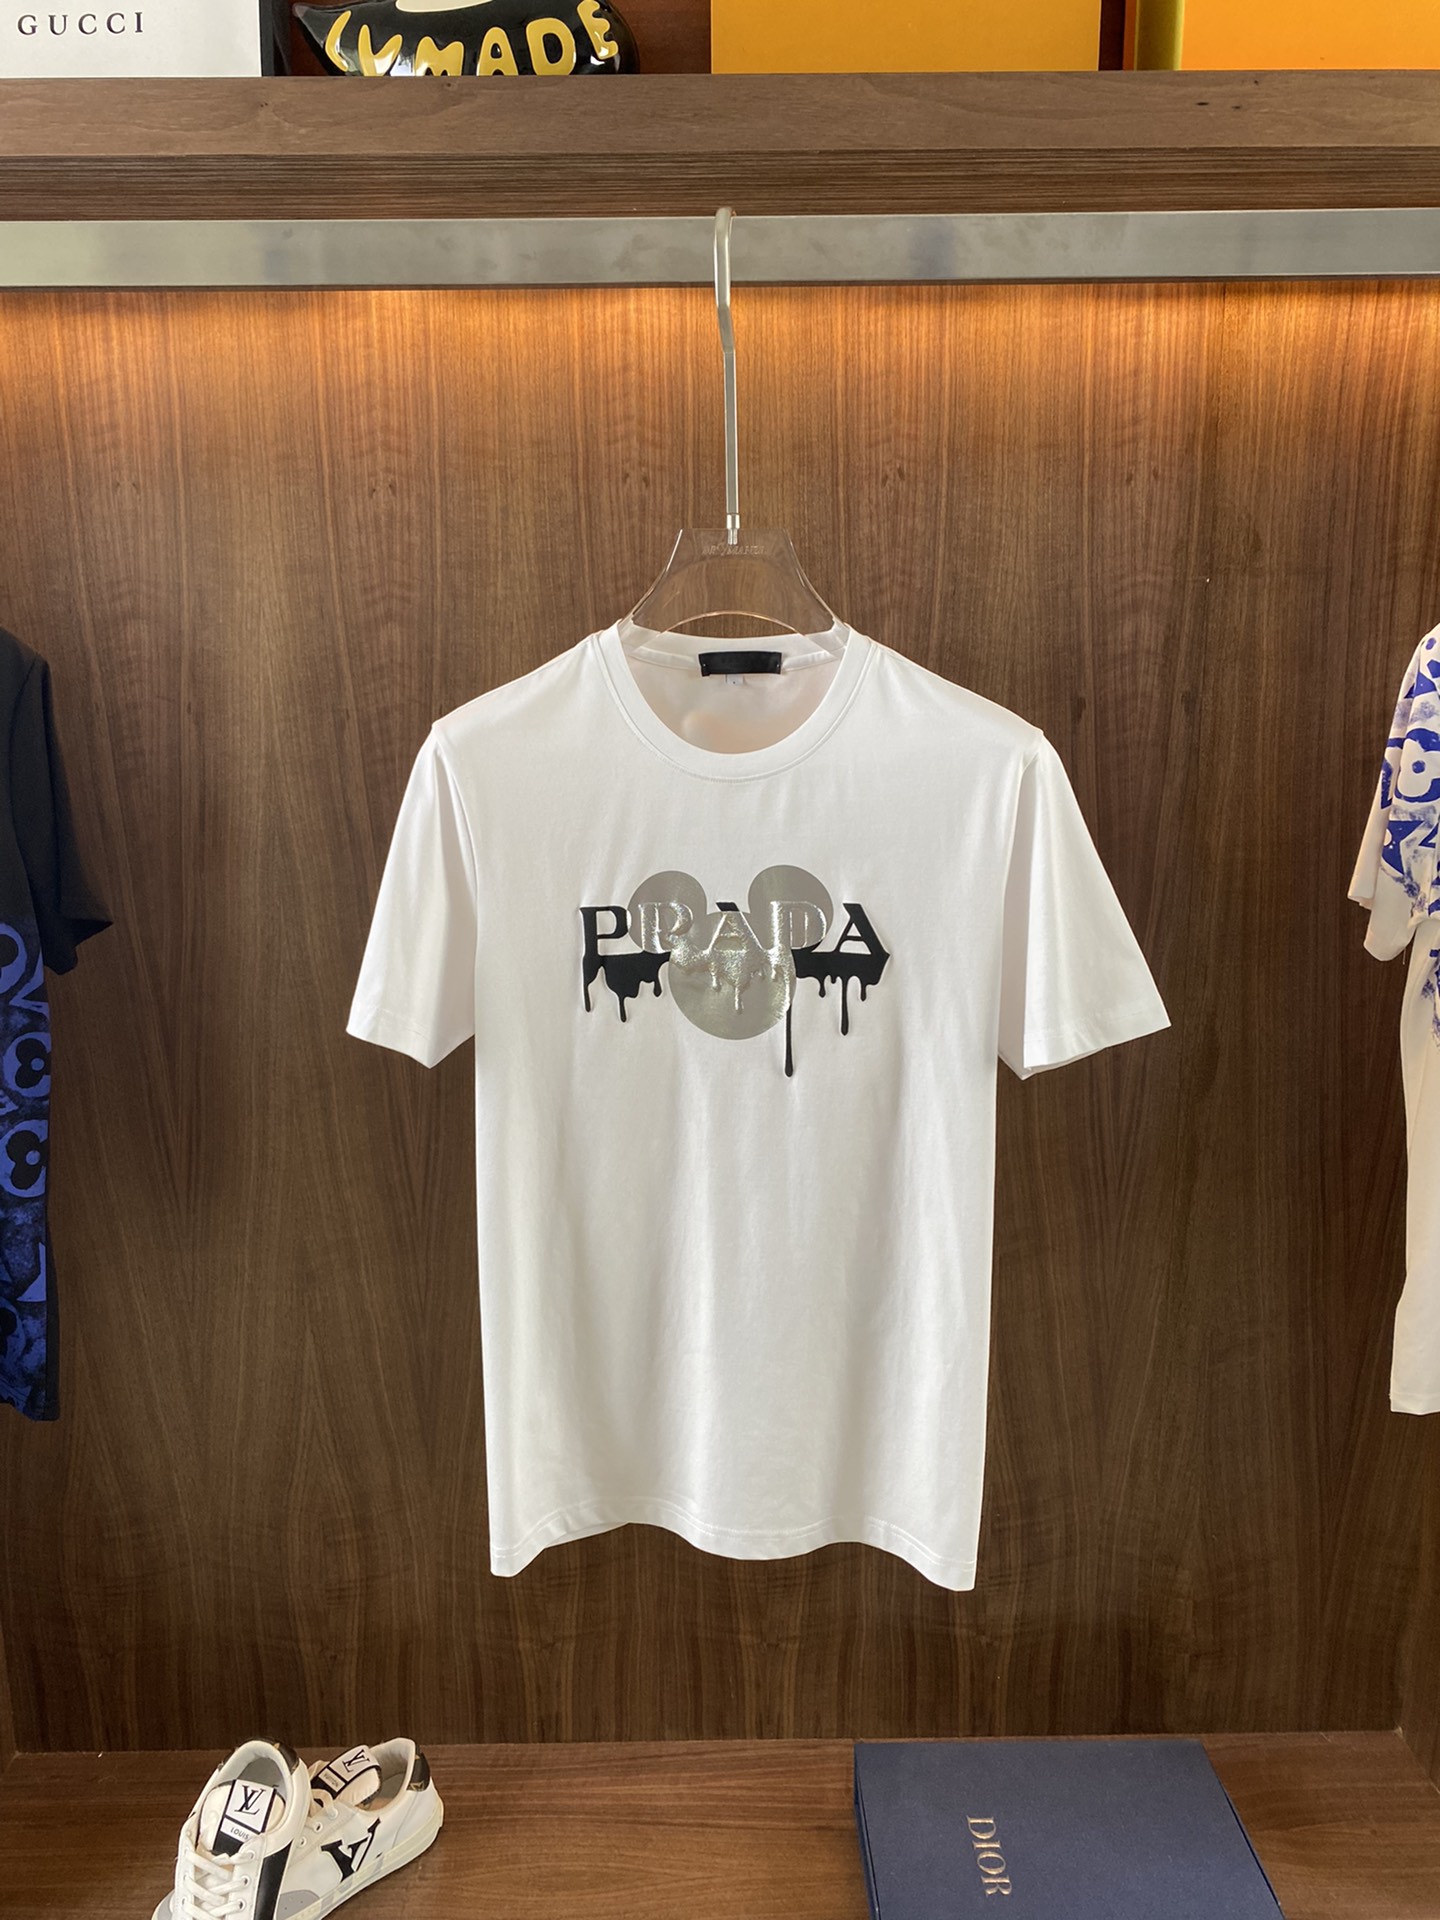 Prada Clothing T-Shirt Cotton Mercerized Spring/Summer Collection Short Sleeve